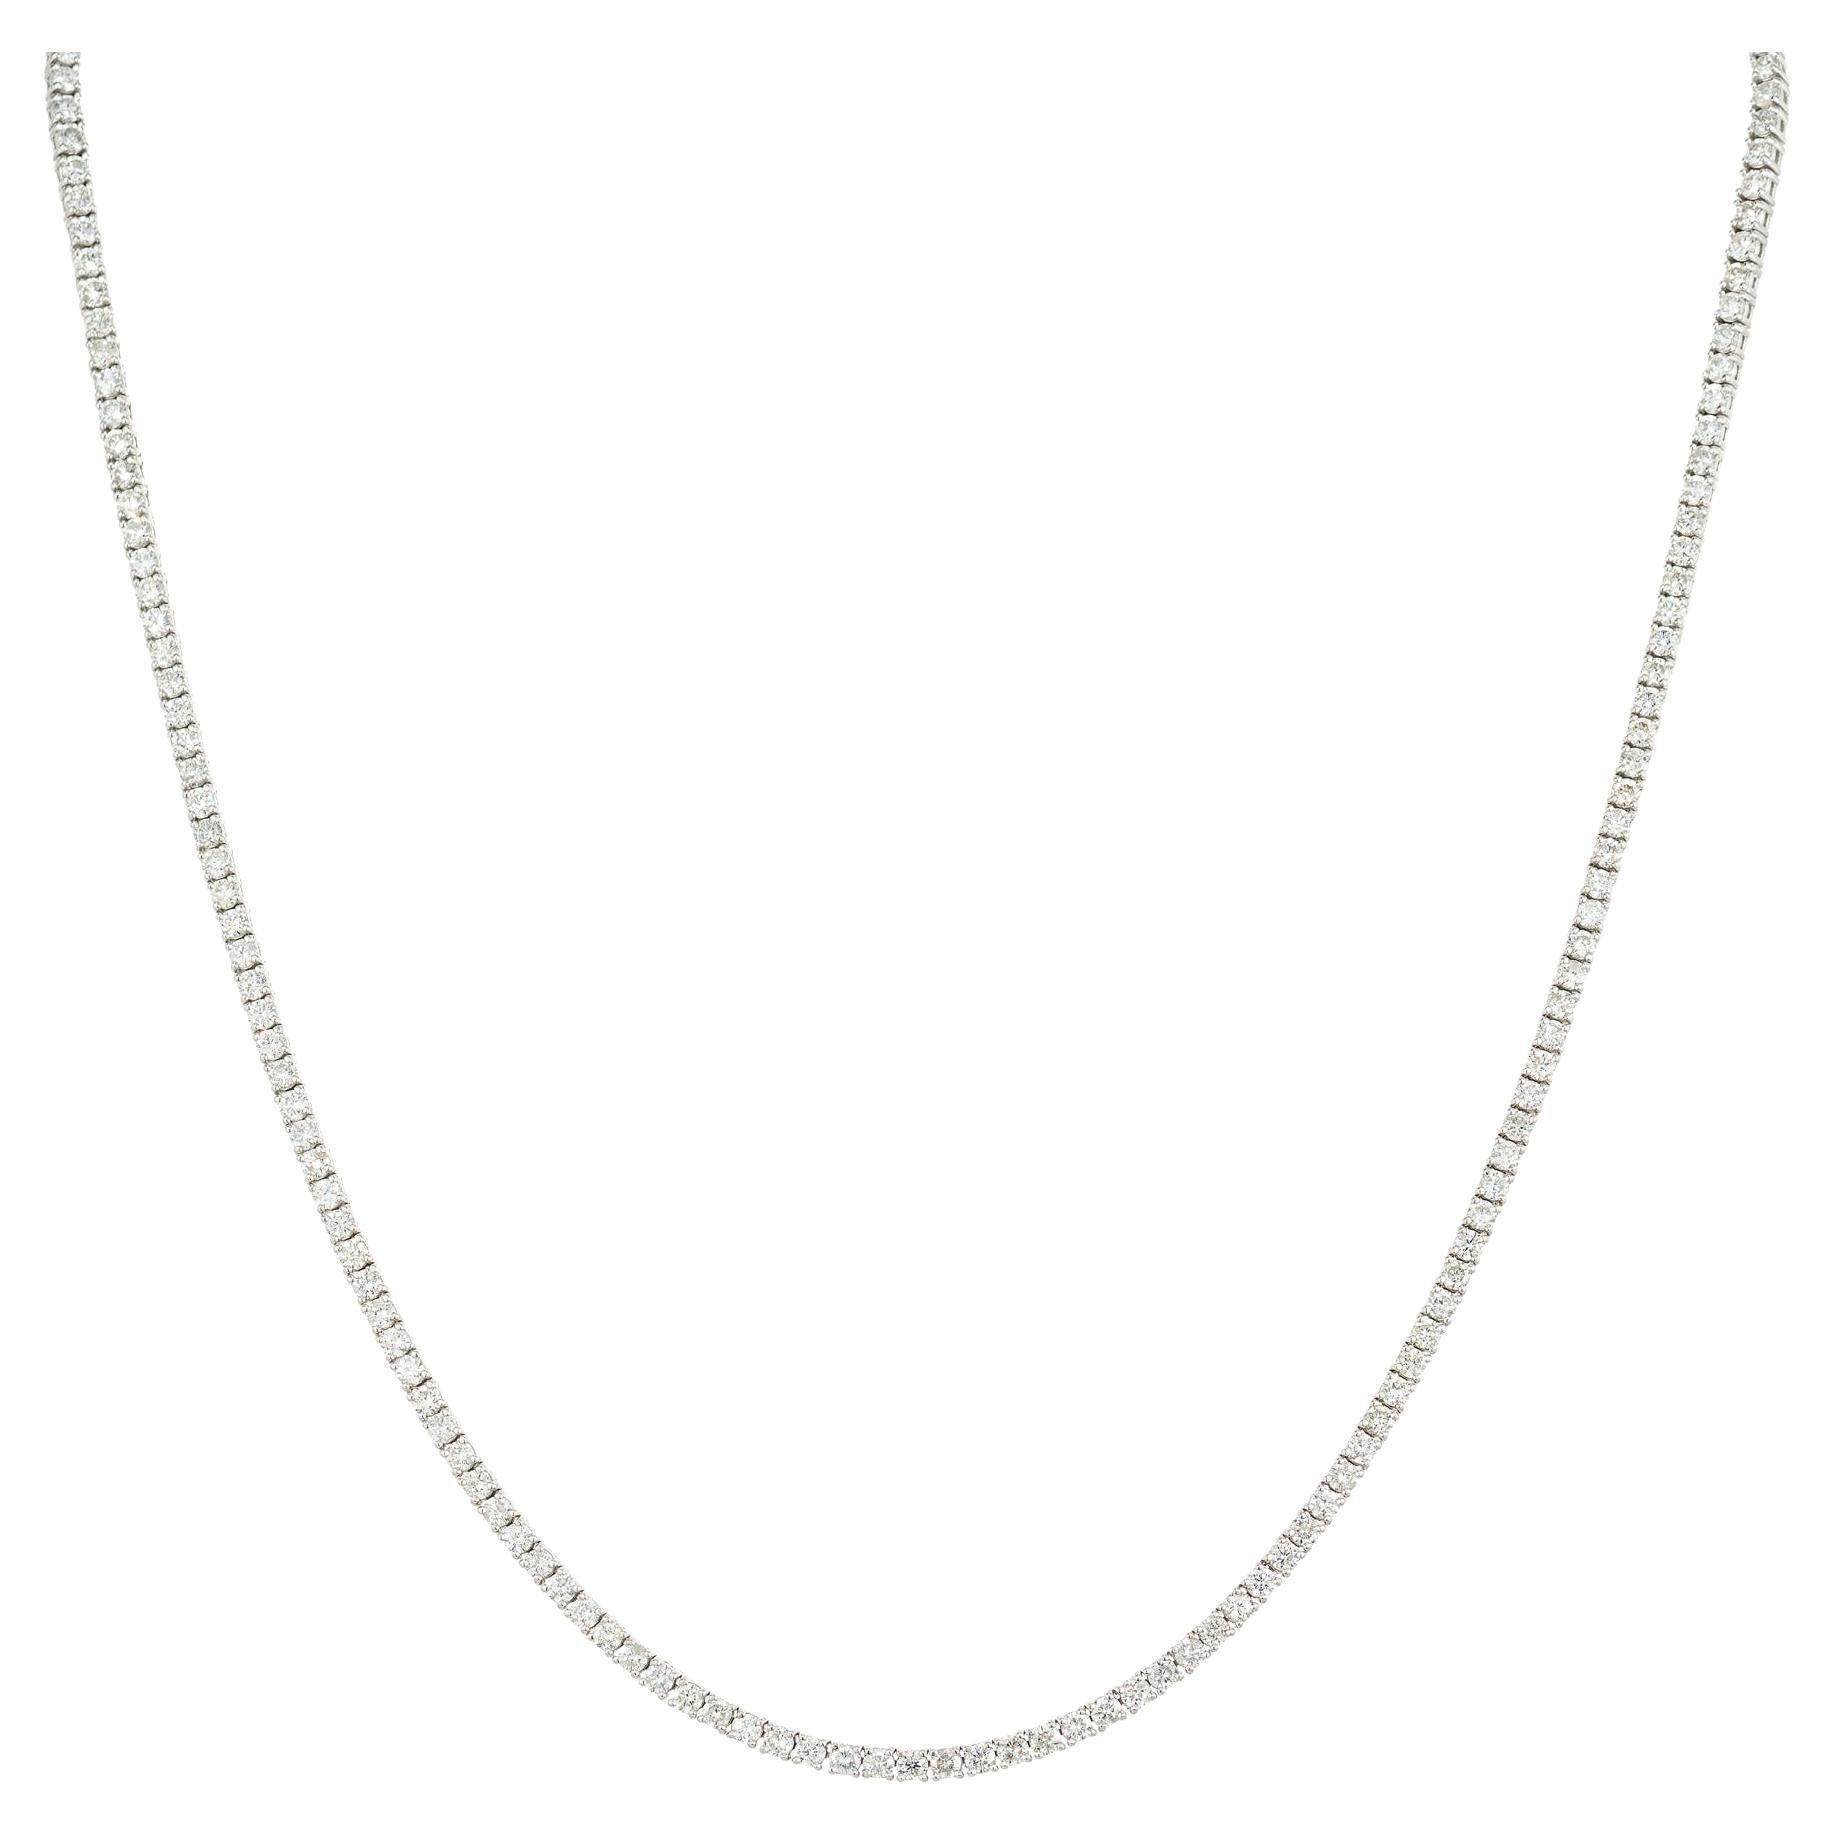 5.50 Carat Diamond White Gold Tennis Necklace For Sale